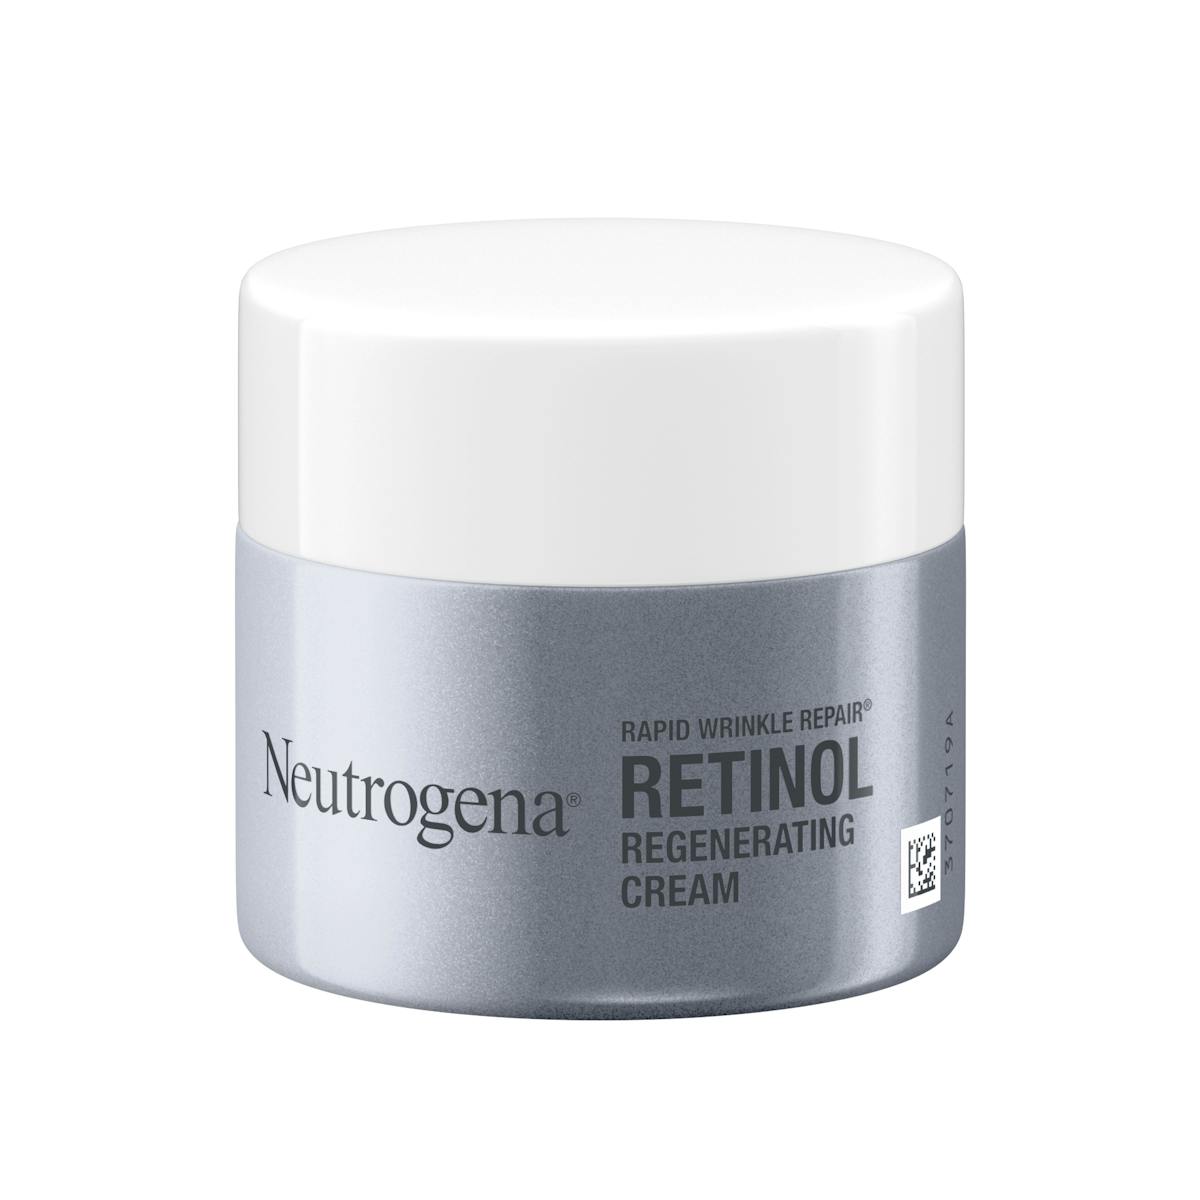 Neutrogena Rapid Wrinkle Repair Face Cream - 1.7 oz jar